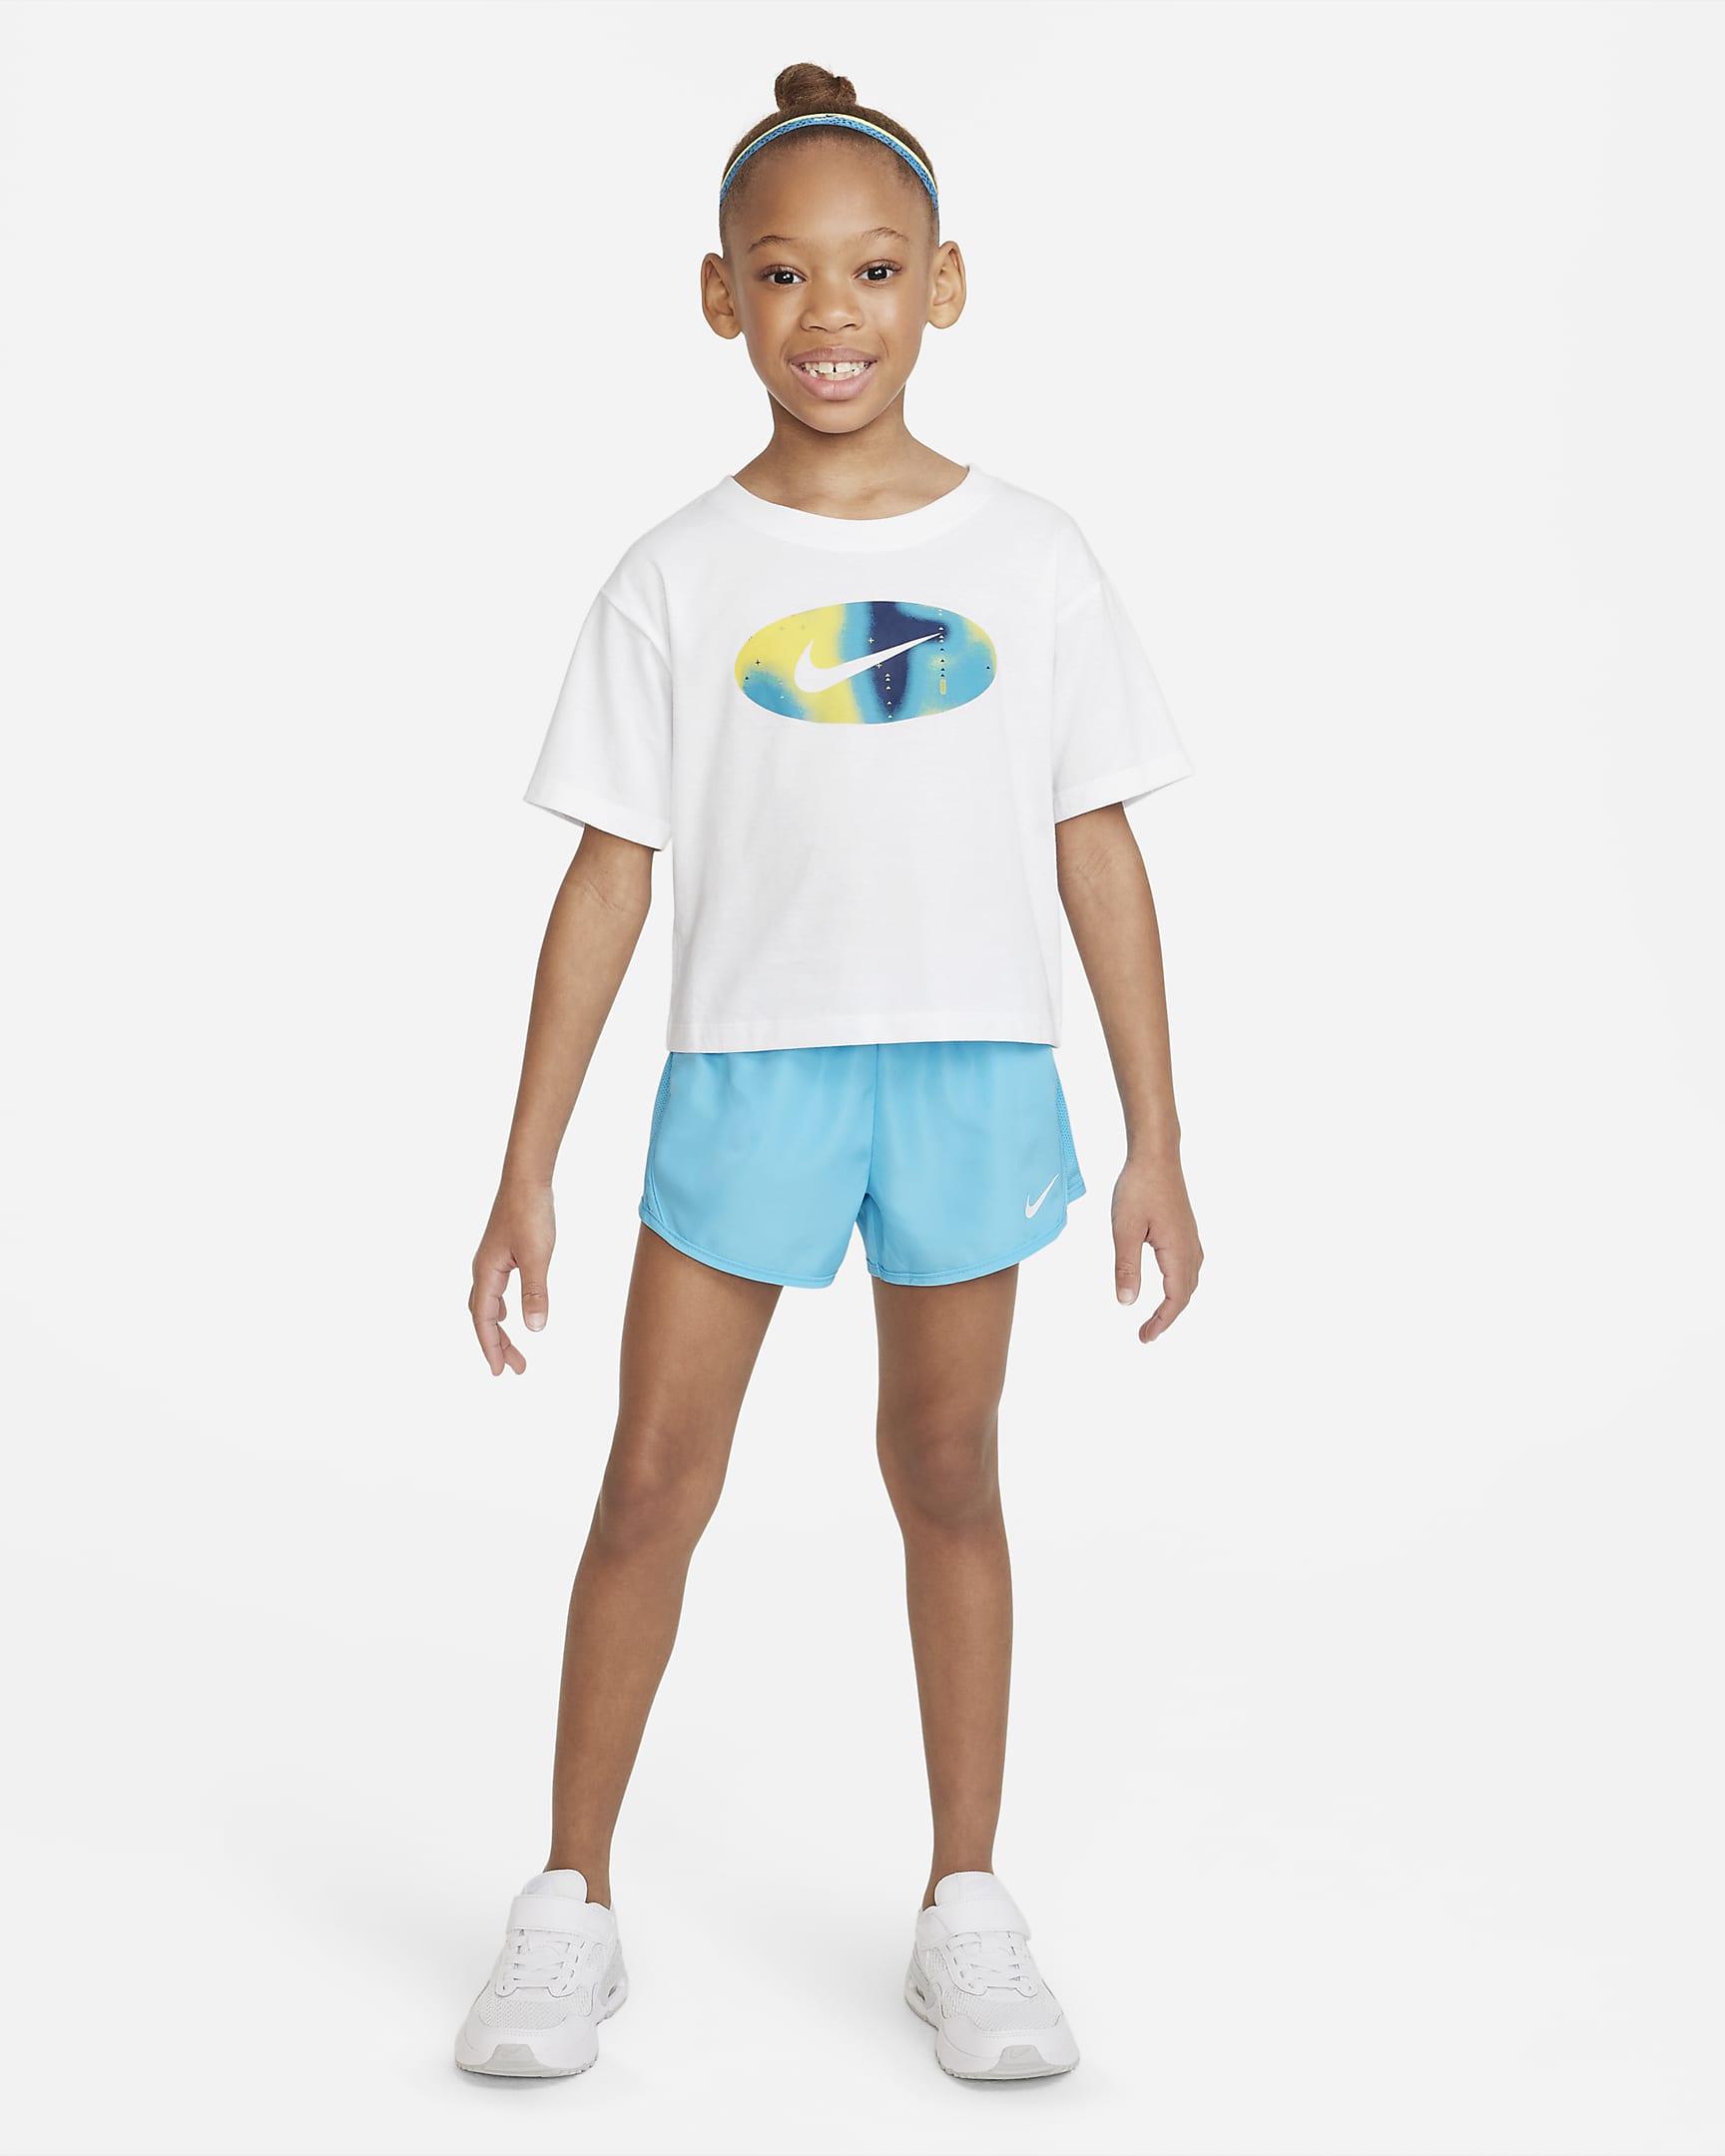 Nike Kids Create Graphic Boxy Tee Little Kids' T-Shirt. Nike.com